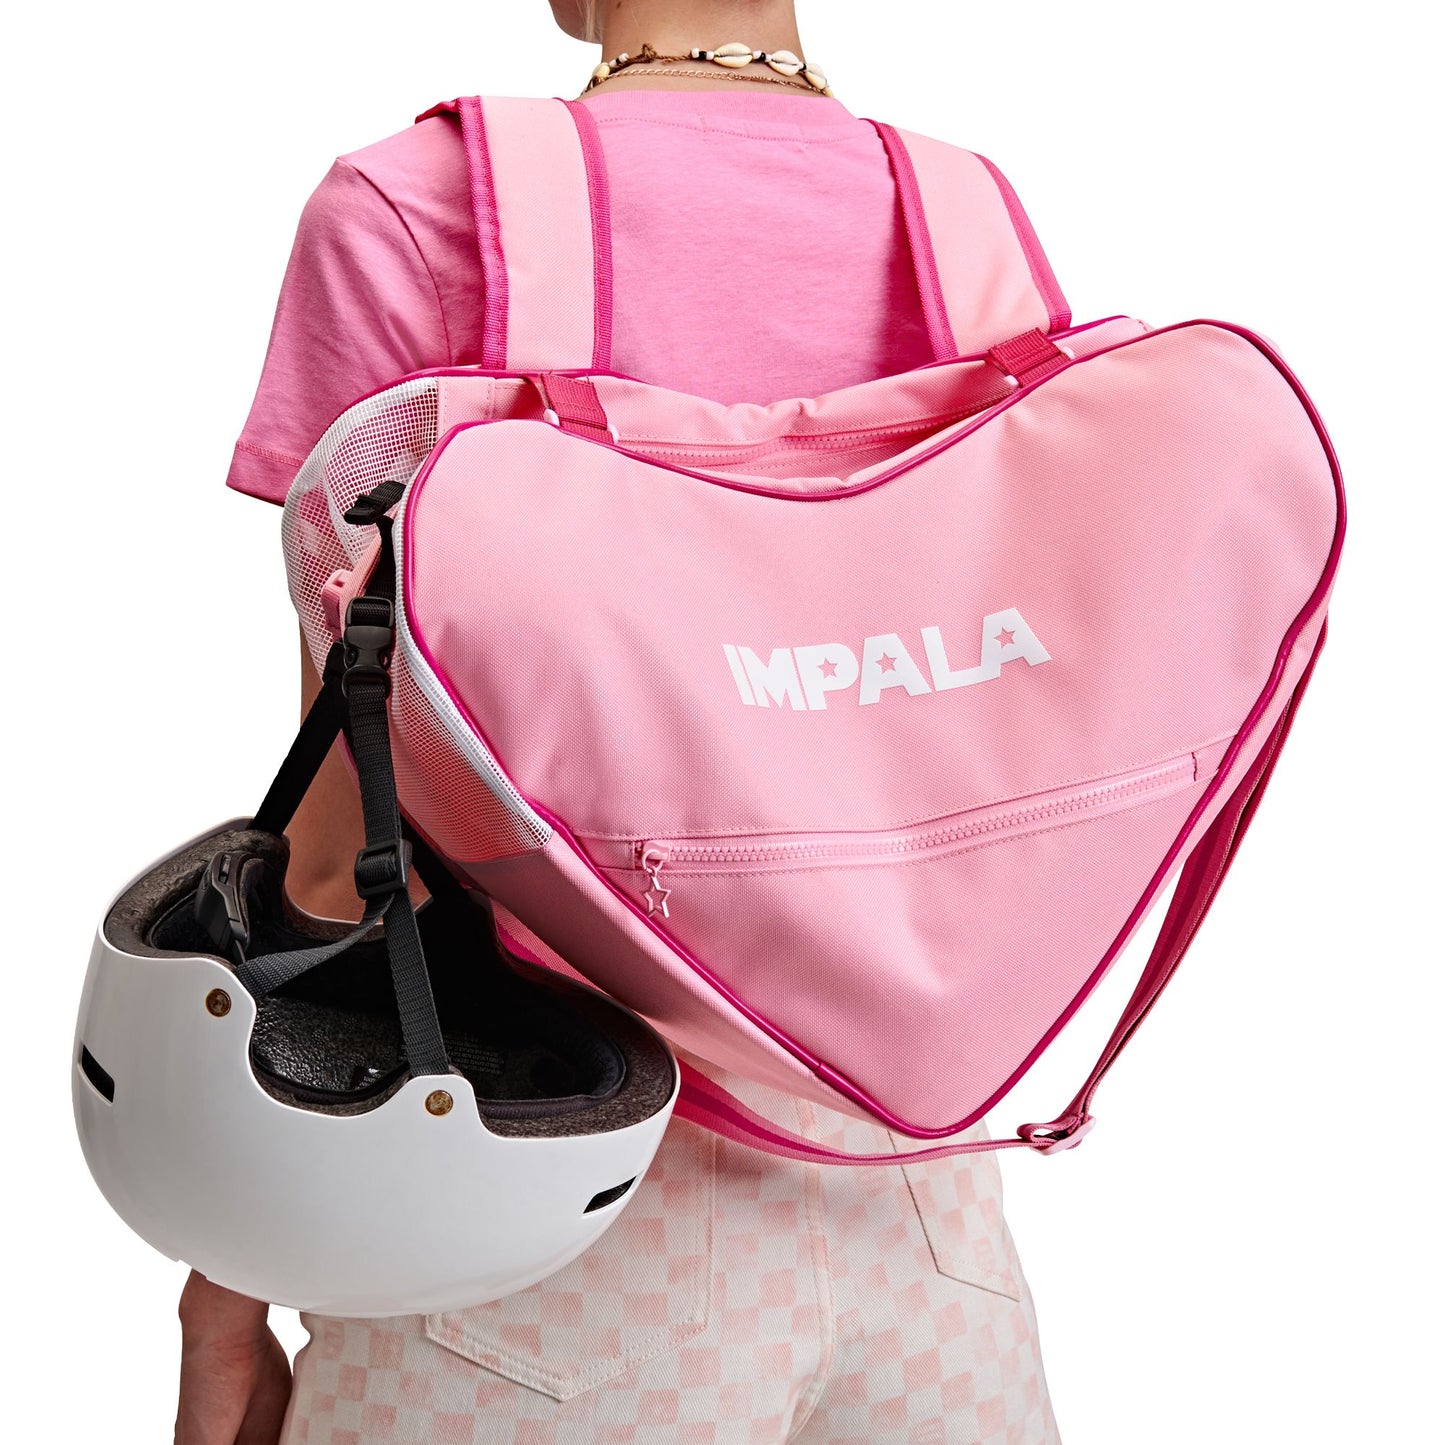 Impala Skate Bag - Pink - Impala Rollerskates